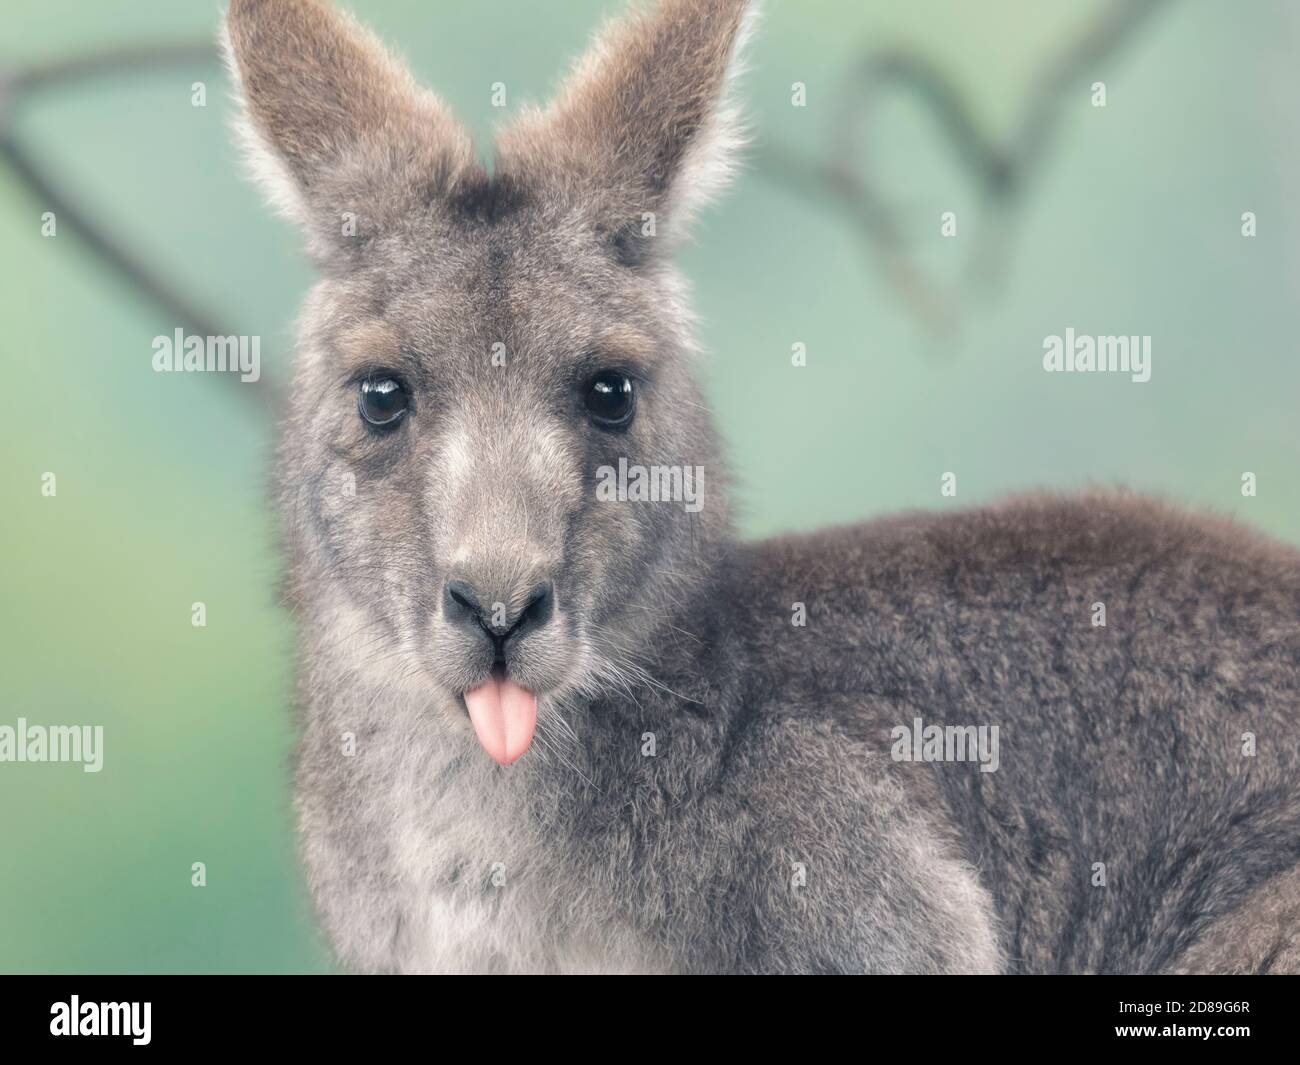 Eastern grey kangaroo sticking out its tongue, Australia Stock Photo - Alamy